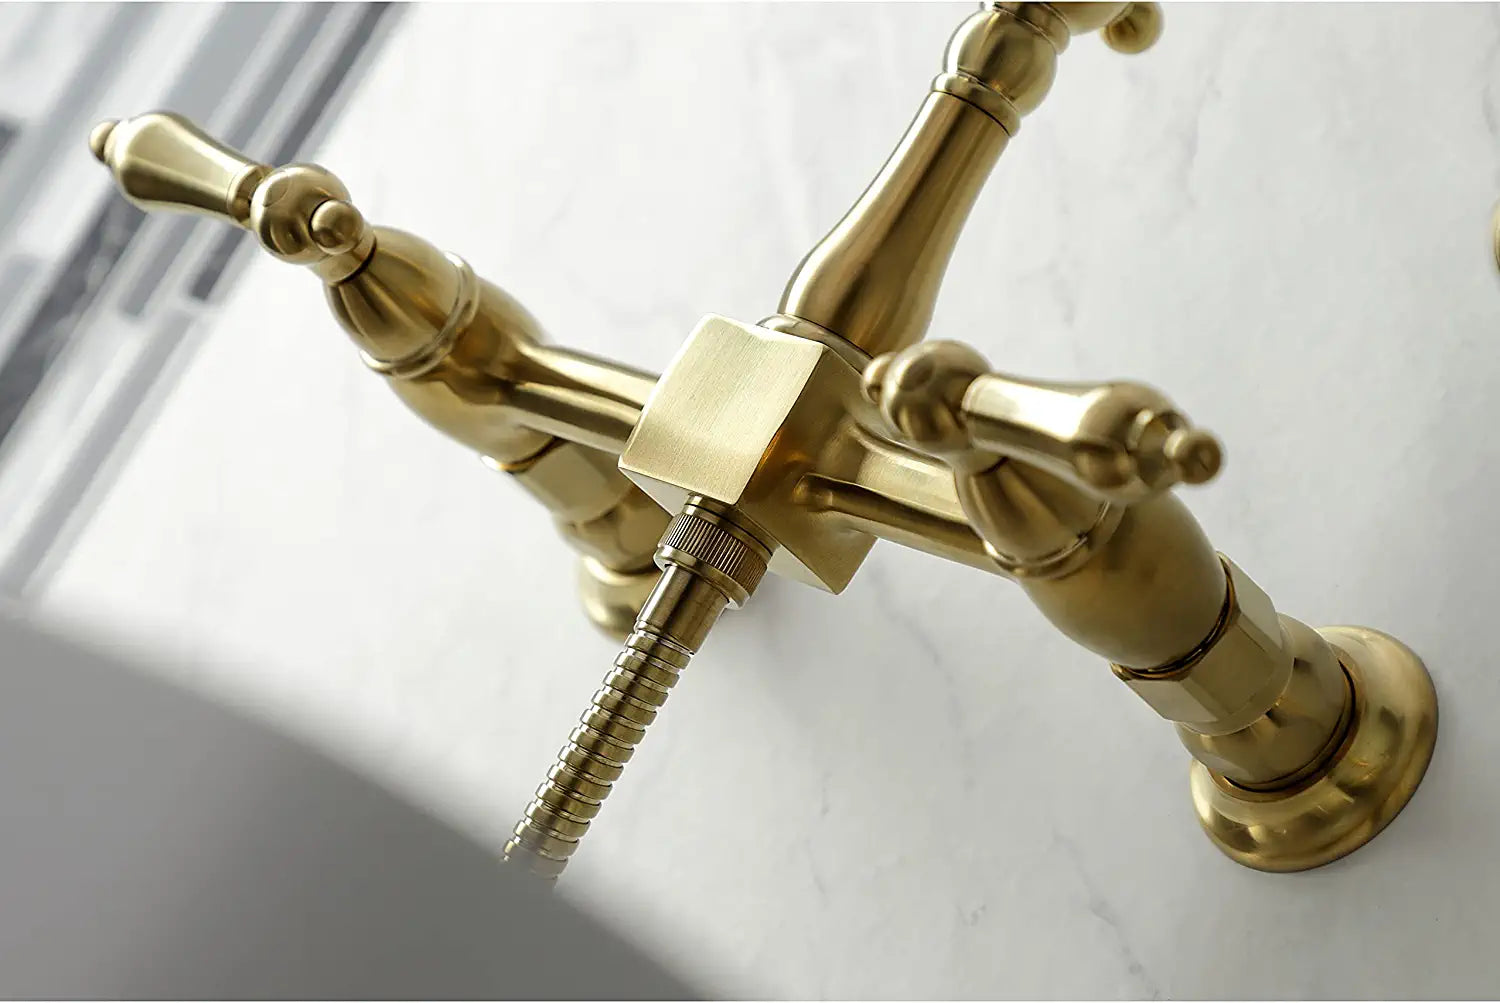 Kingston Brass KS1267ALBS Heritage 8-Inch Centerset Wall Mount Kitchen Faucet with Brass Sprayer, Brushed Brass